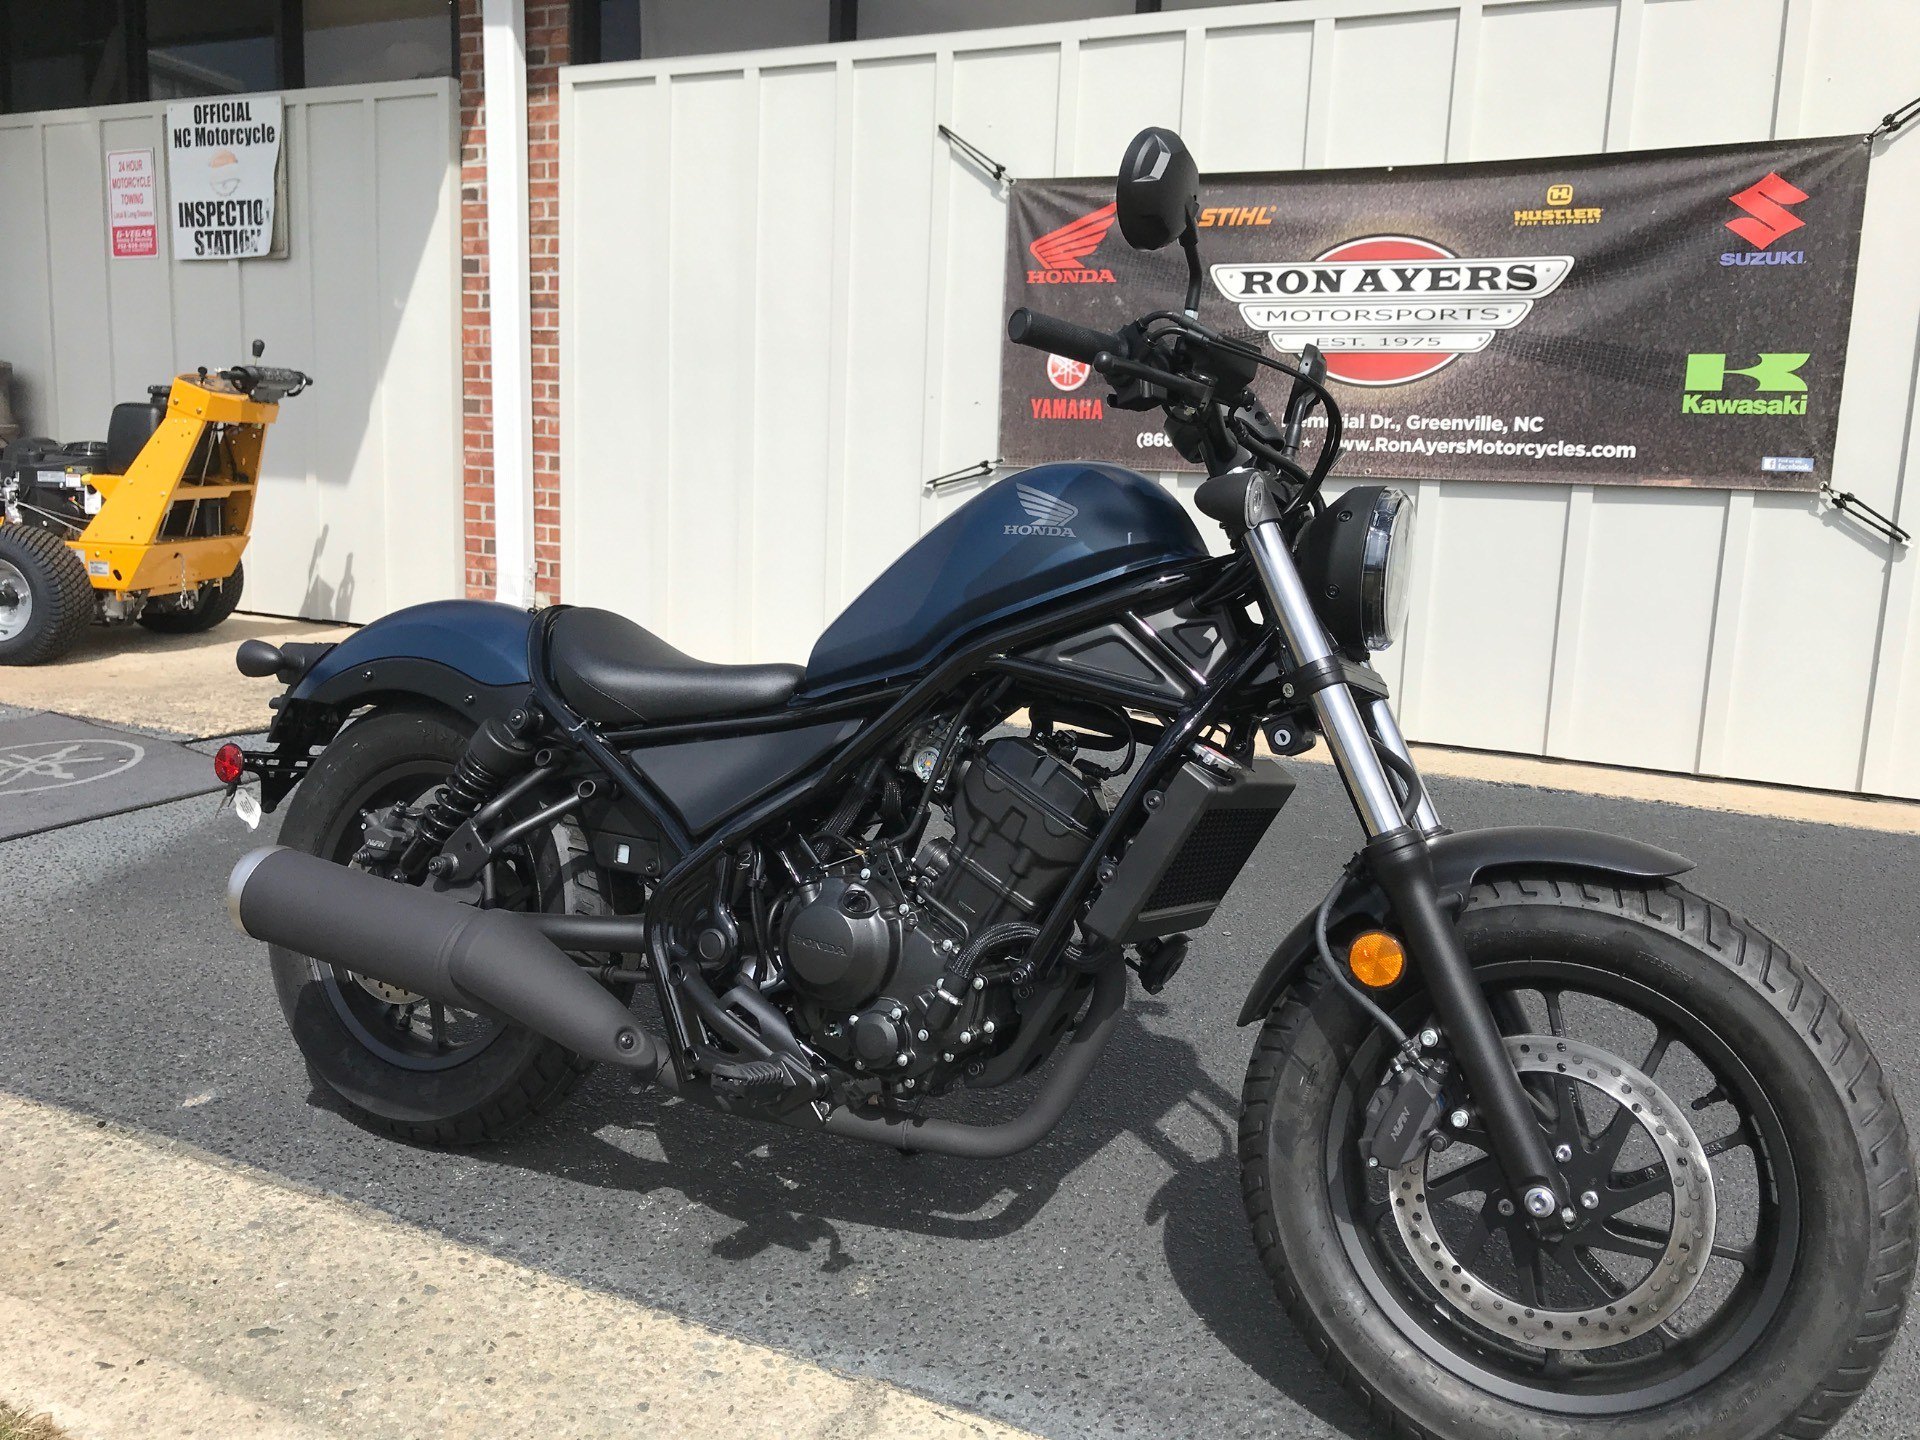 New 2020 Honda Rebel 300 Motorcycles in Greenville, NC | Stock Number: N/A